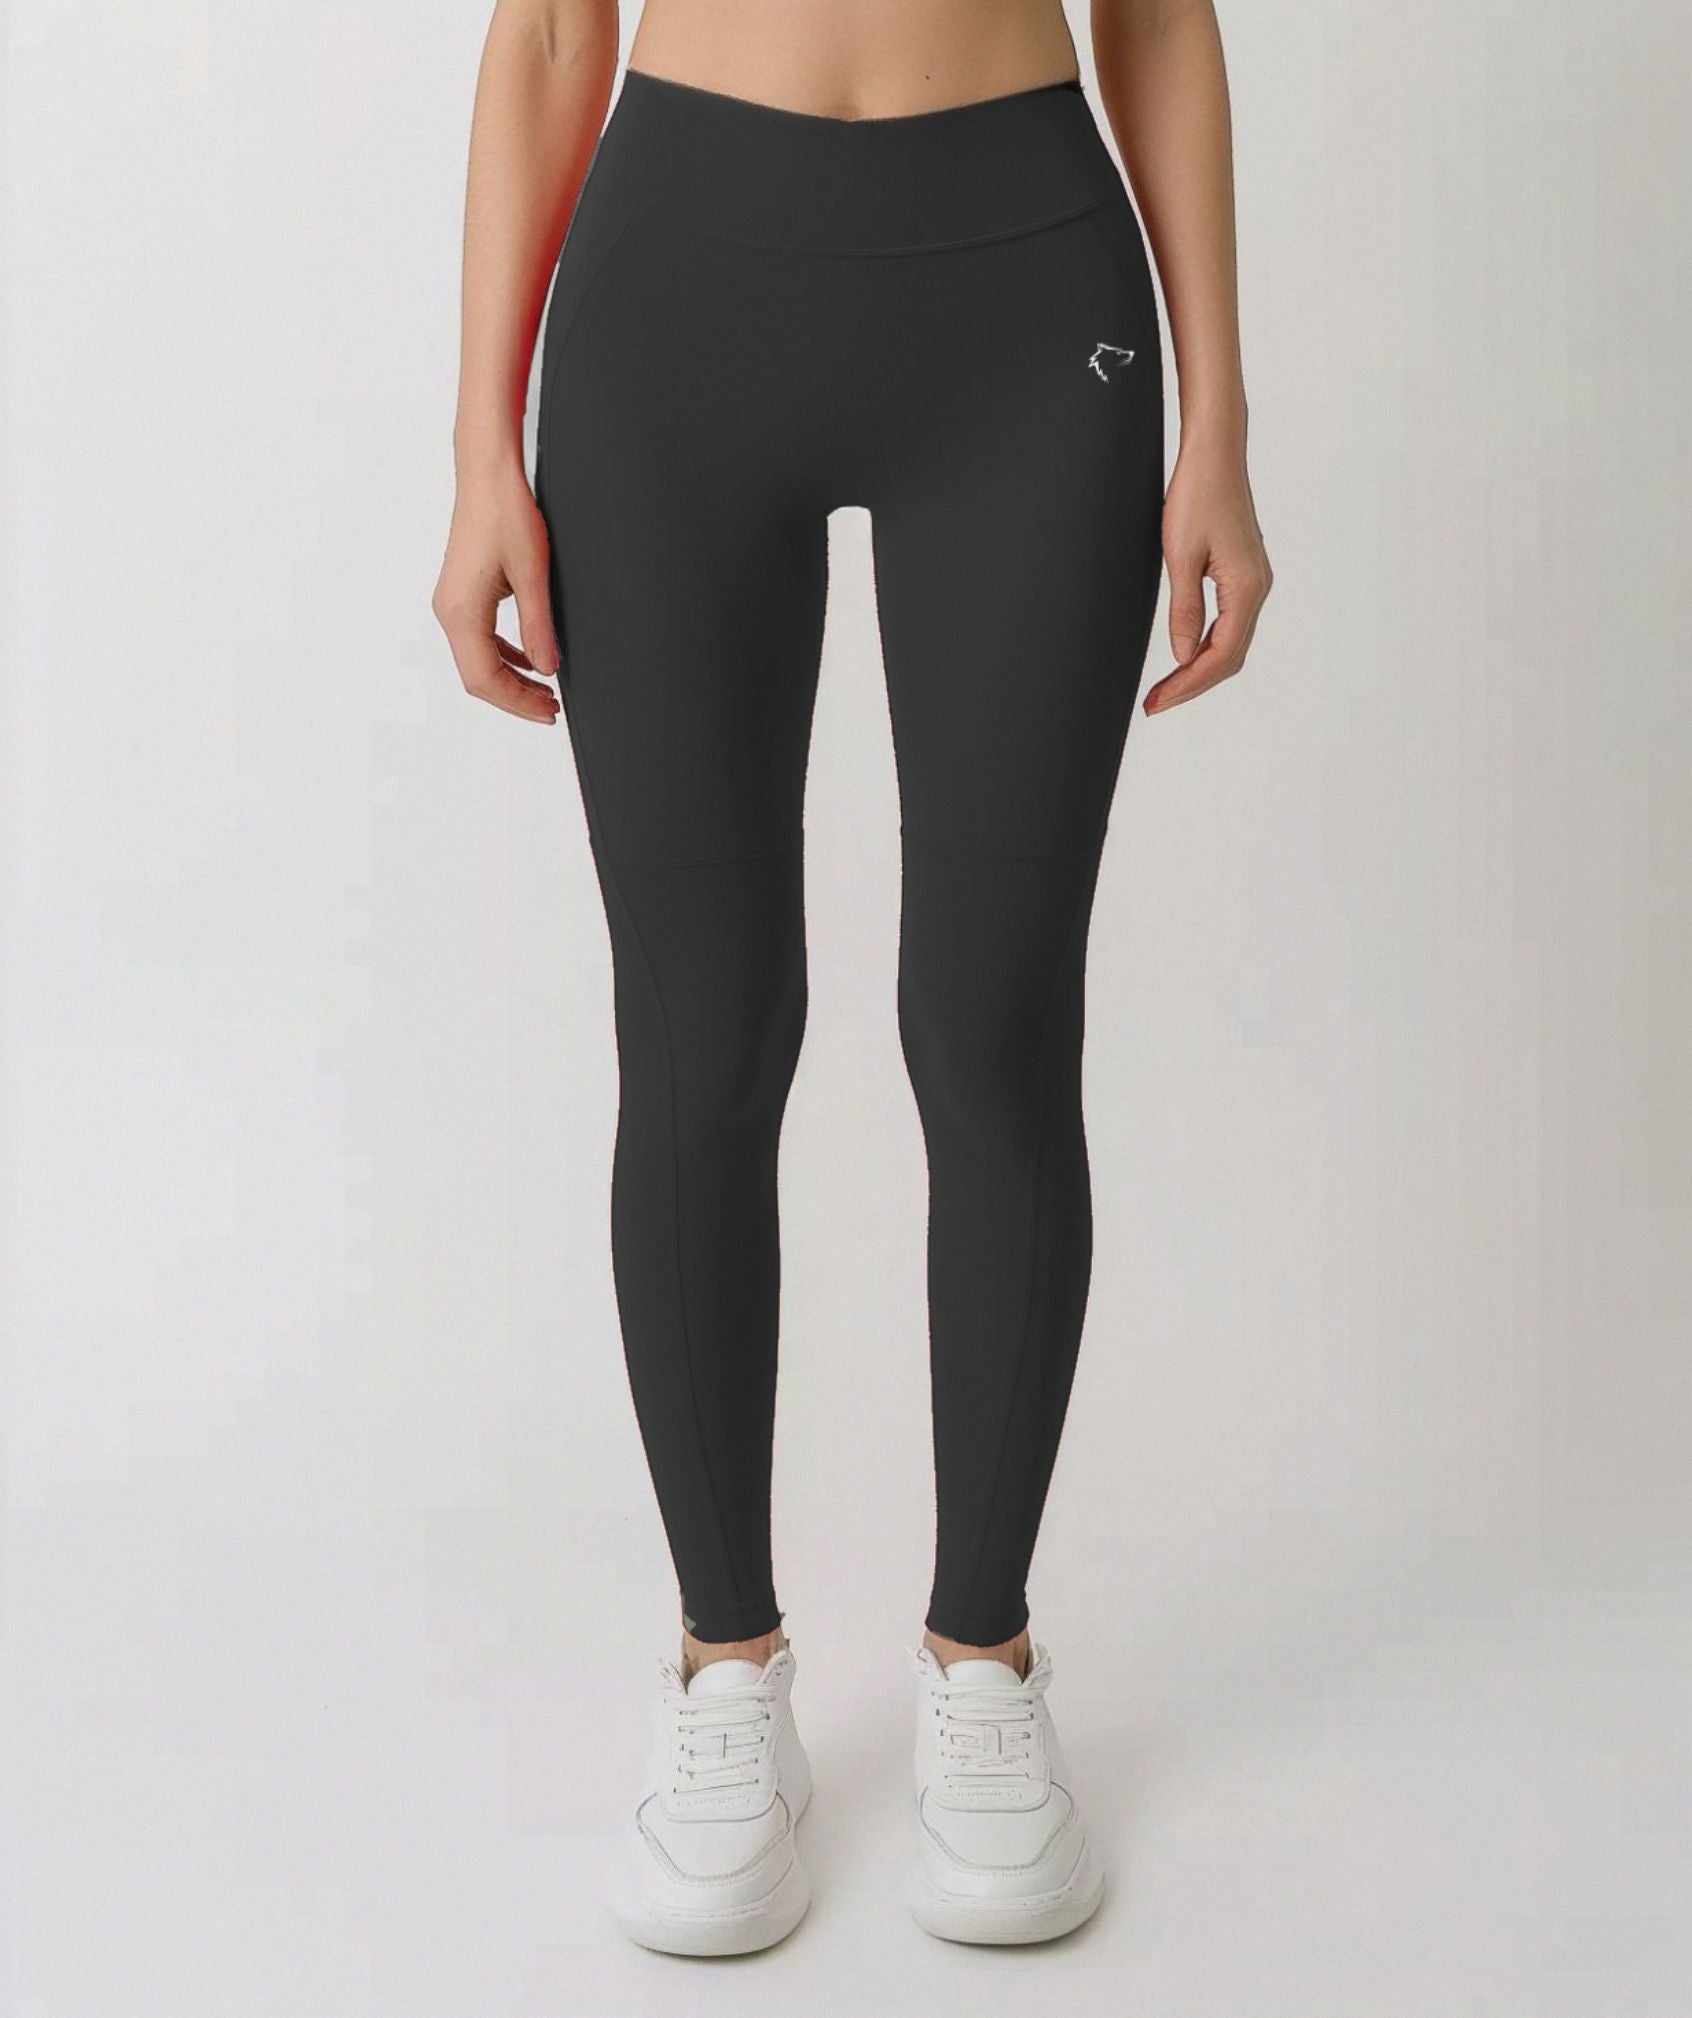 Apex™ black Harmony Leggings front view - eco-friendly and comfortable leggings